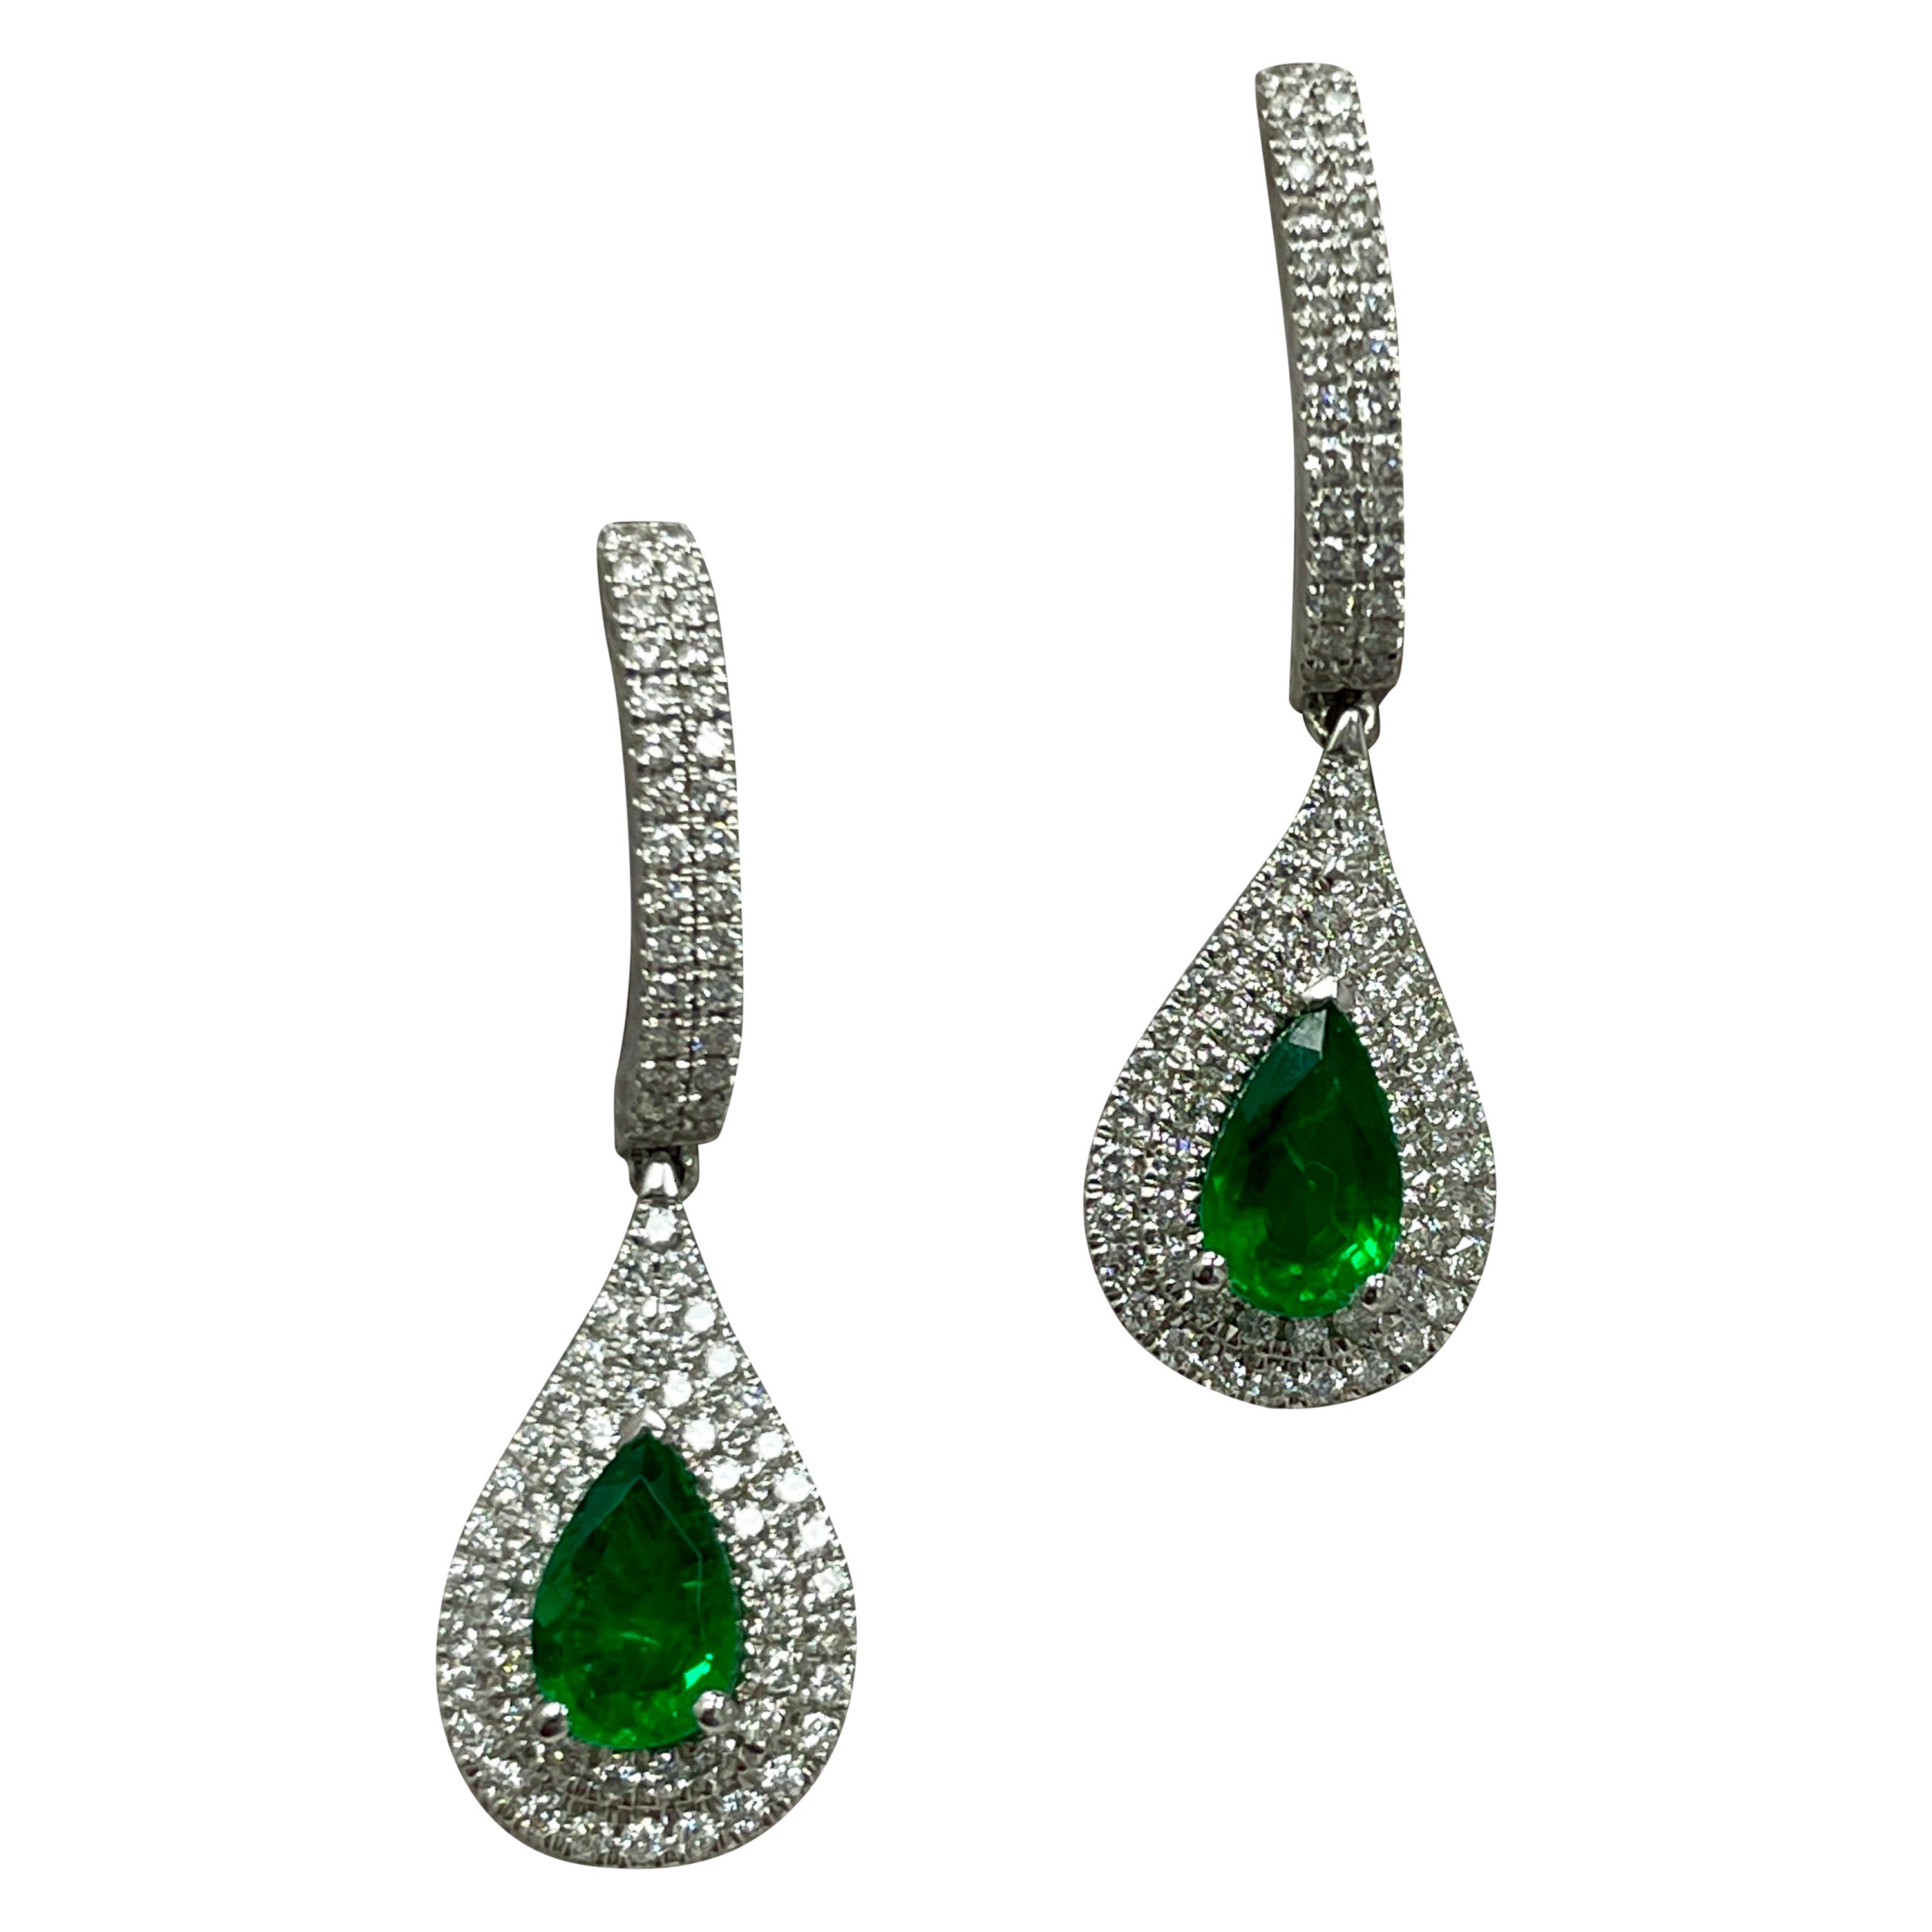 1.29 Carat Emerald, Diamond & White Gold Earrings